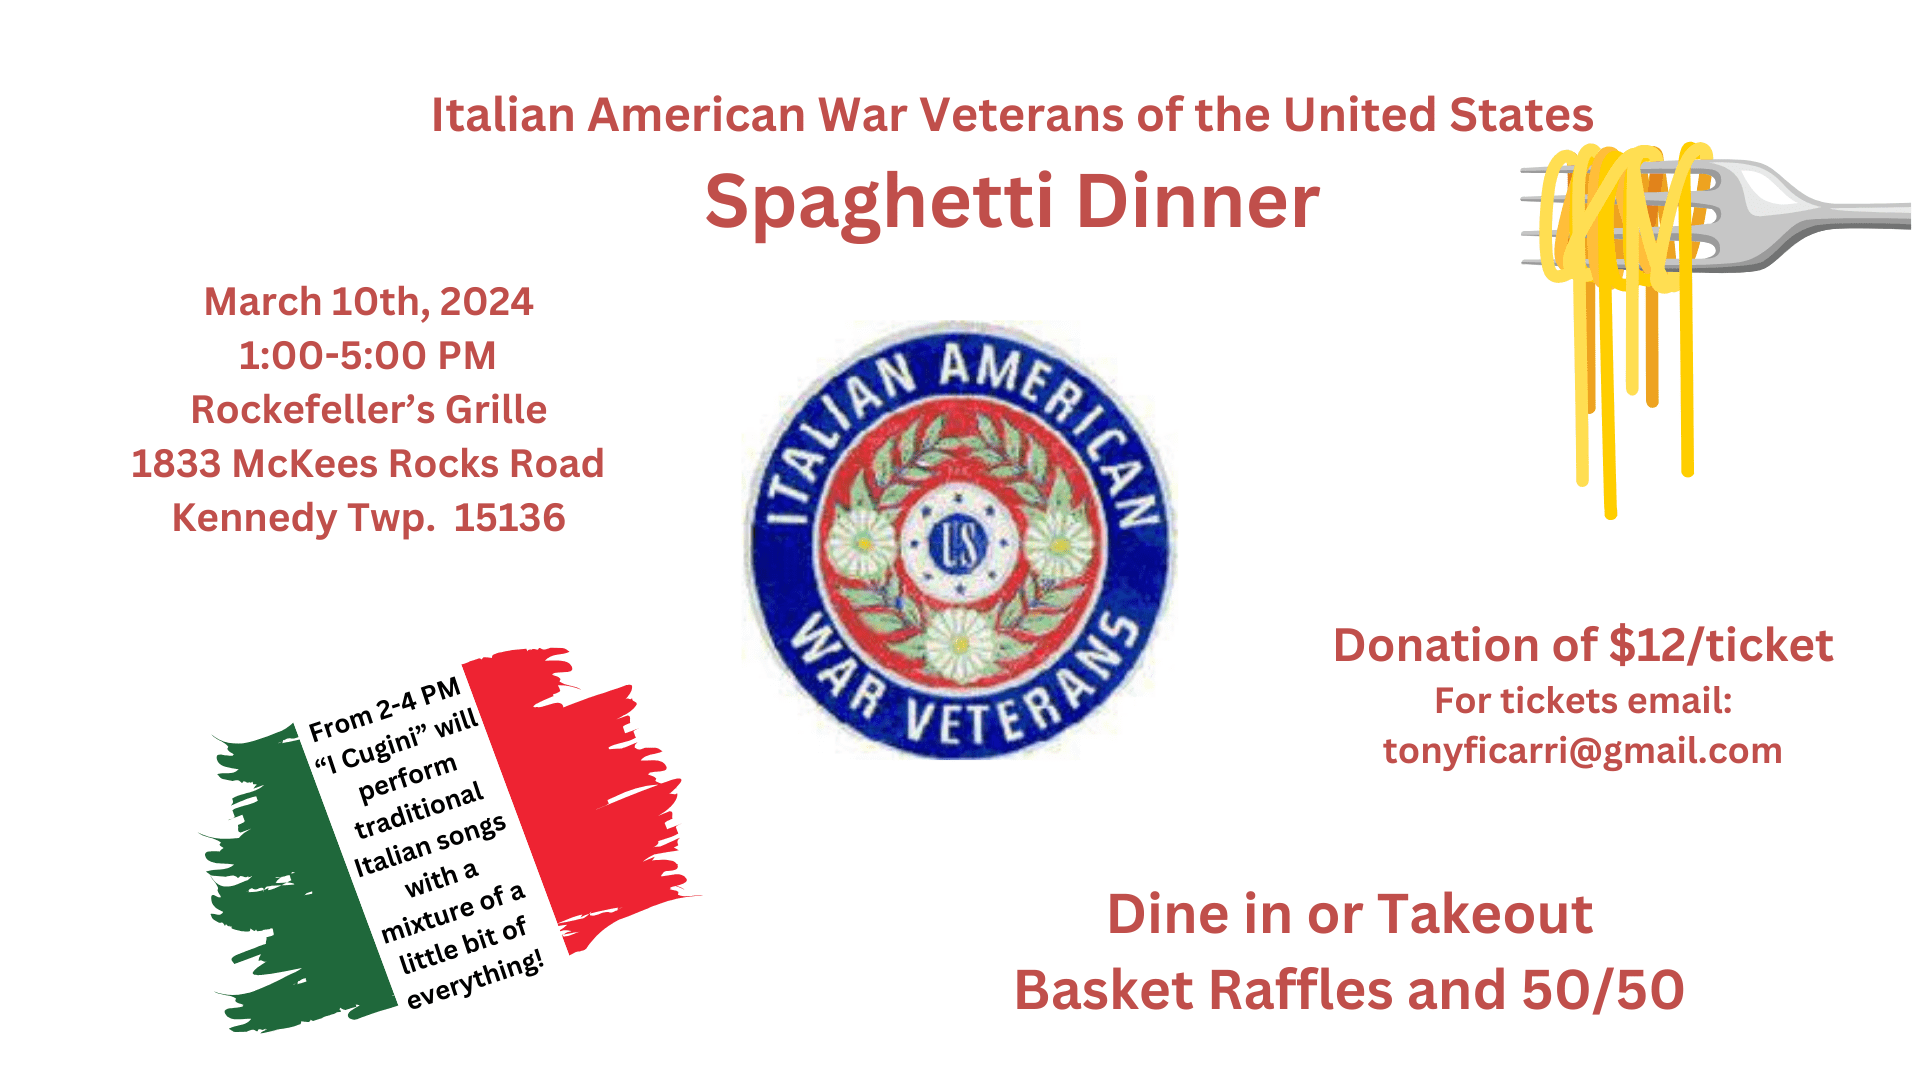 Italian American War Veterans of the United States Spaghetti Dinner